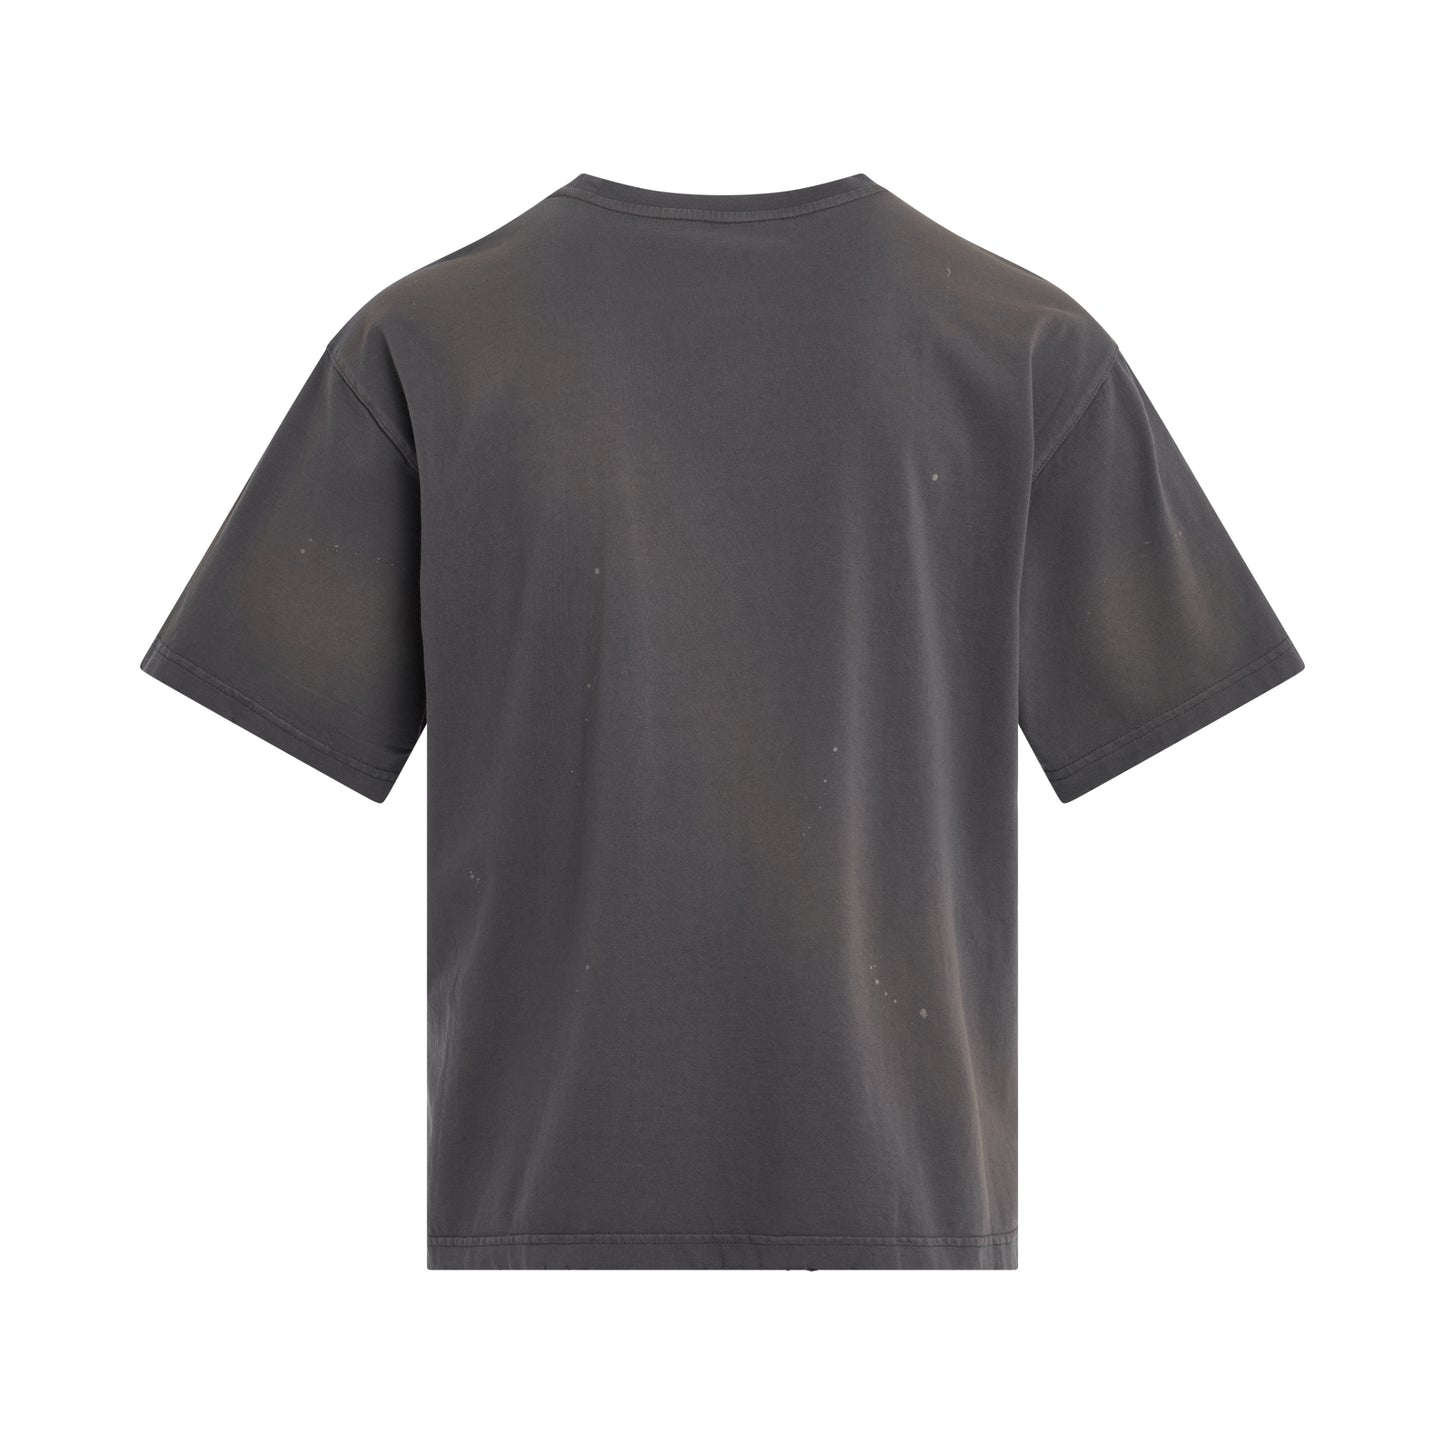 Metallic Print T-Shirt in Charcoal